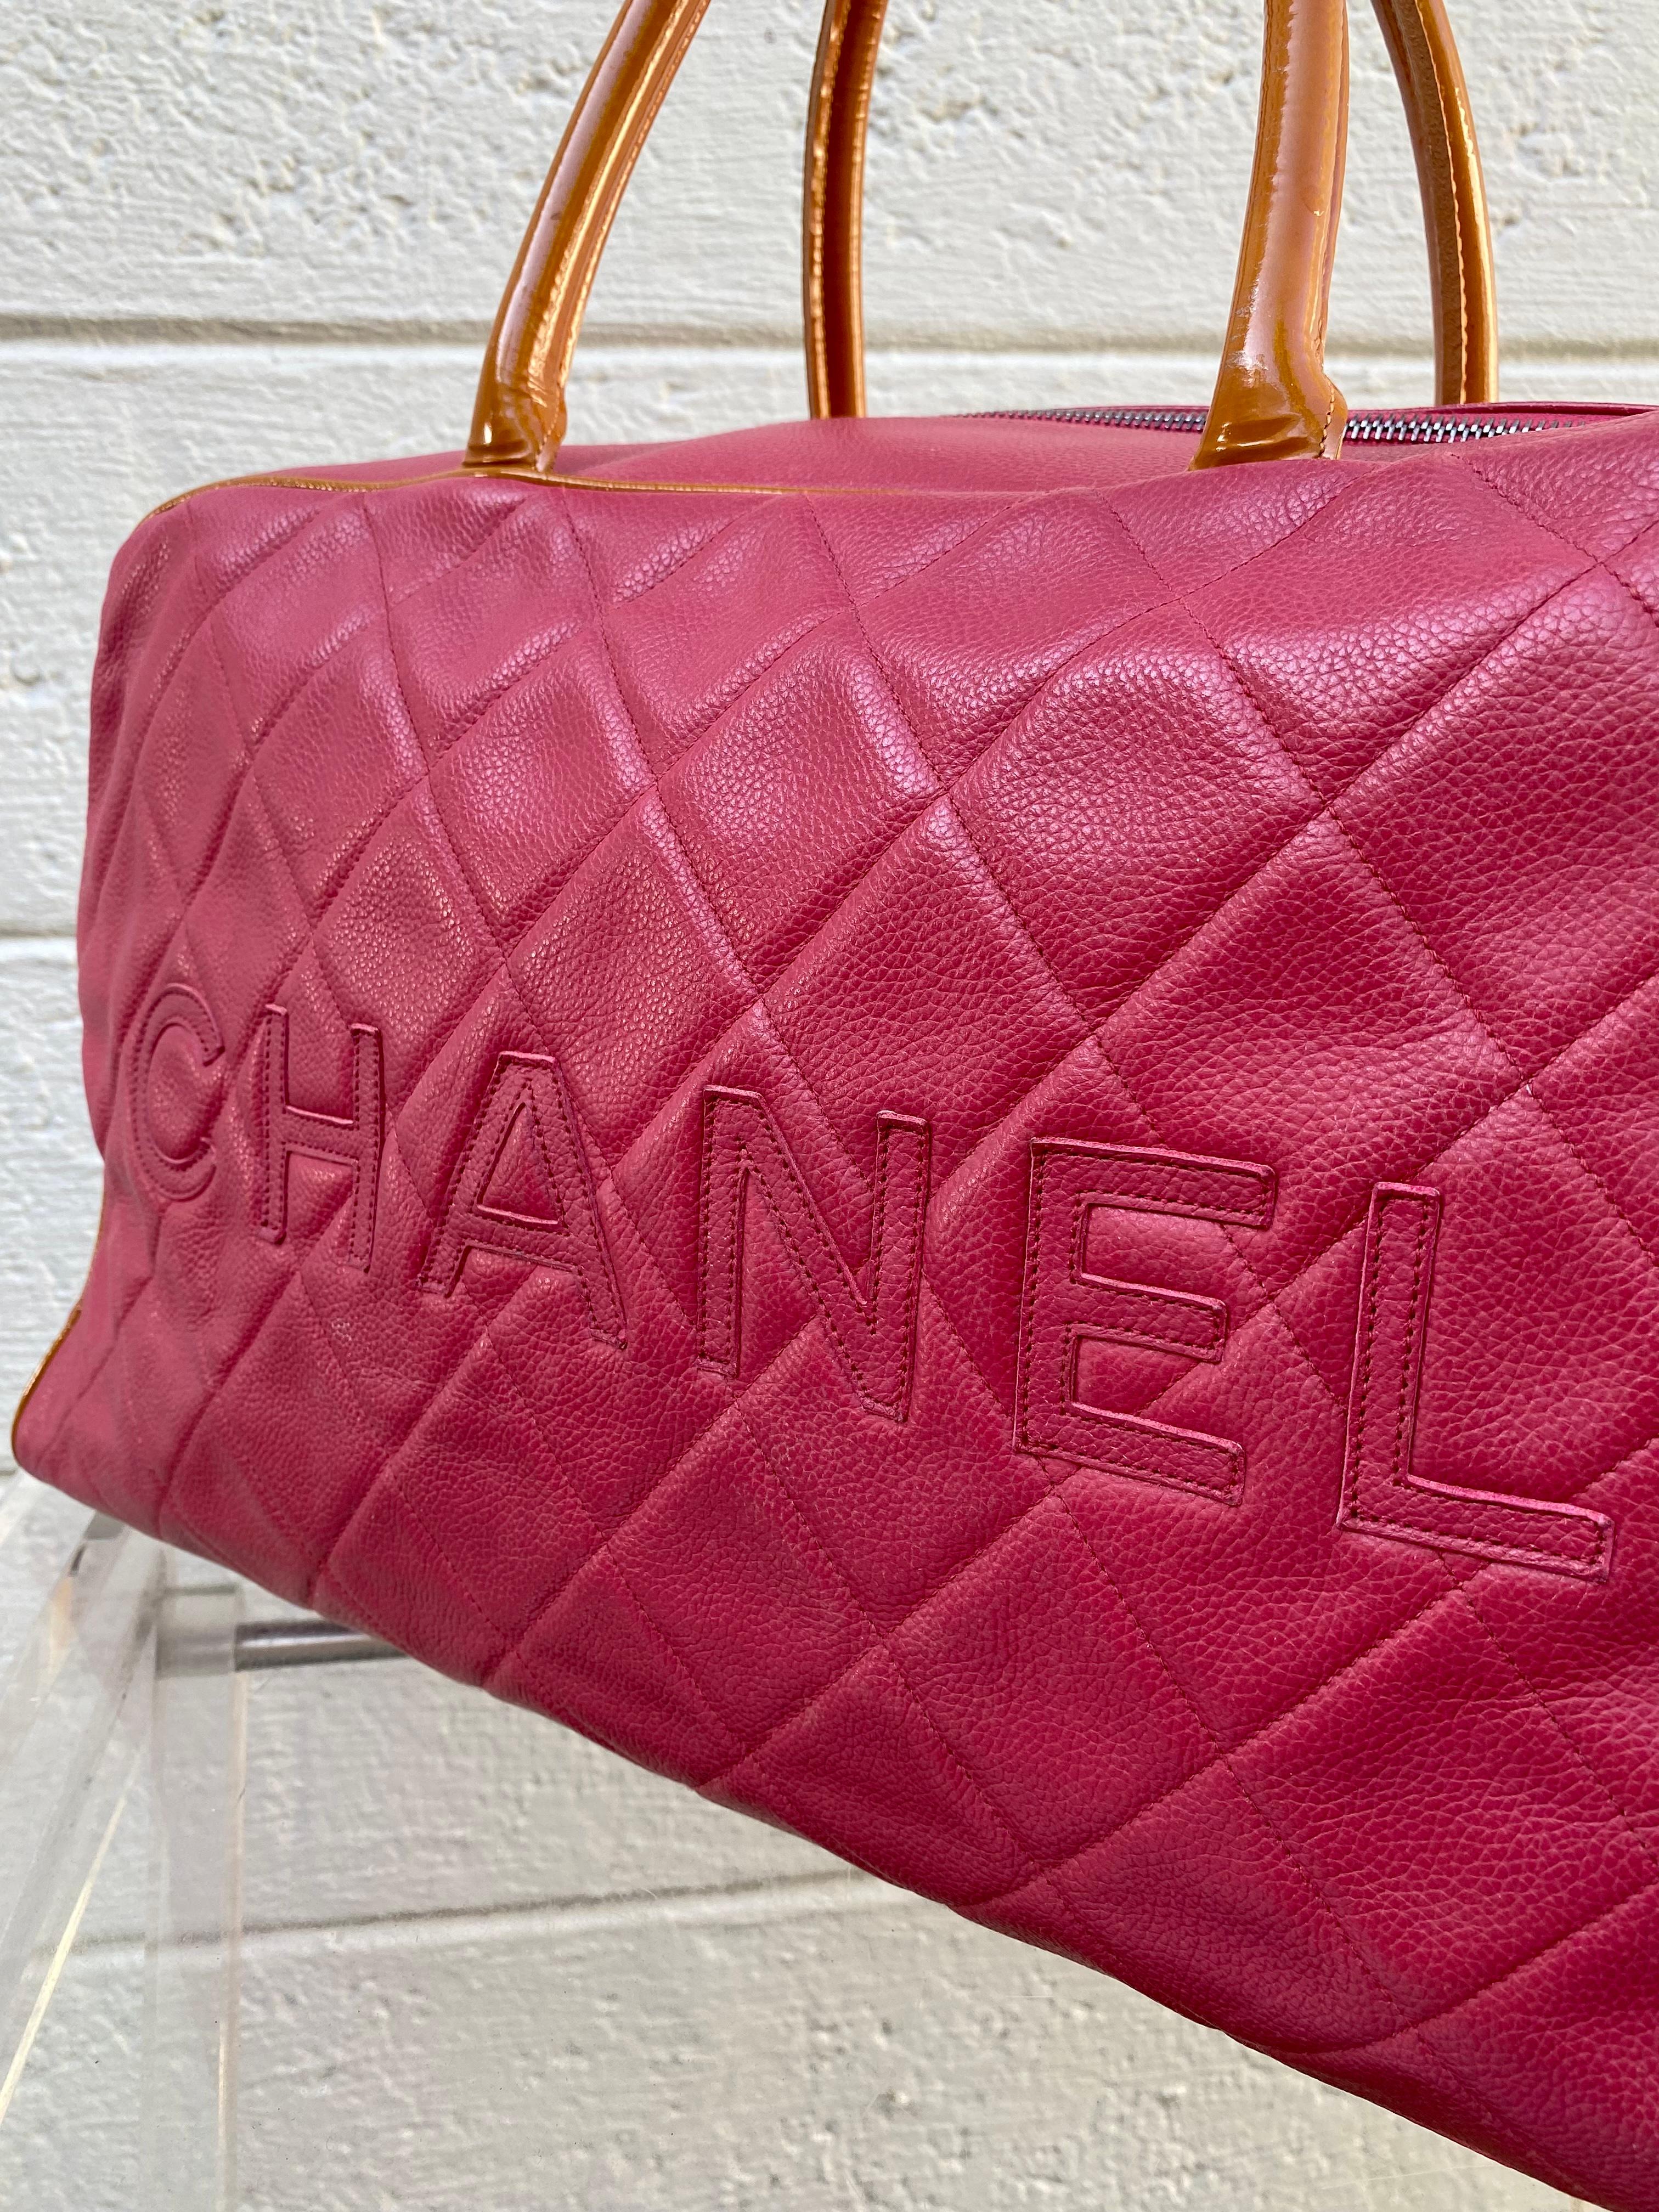 Chanel Rare Vintage Raspberry Pink Caviar Weekender Travel Duffle Shopper Bag For Sale 3